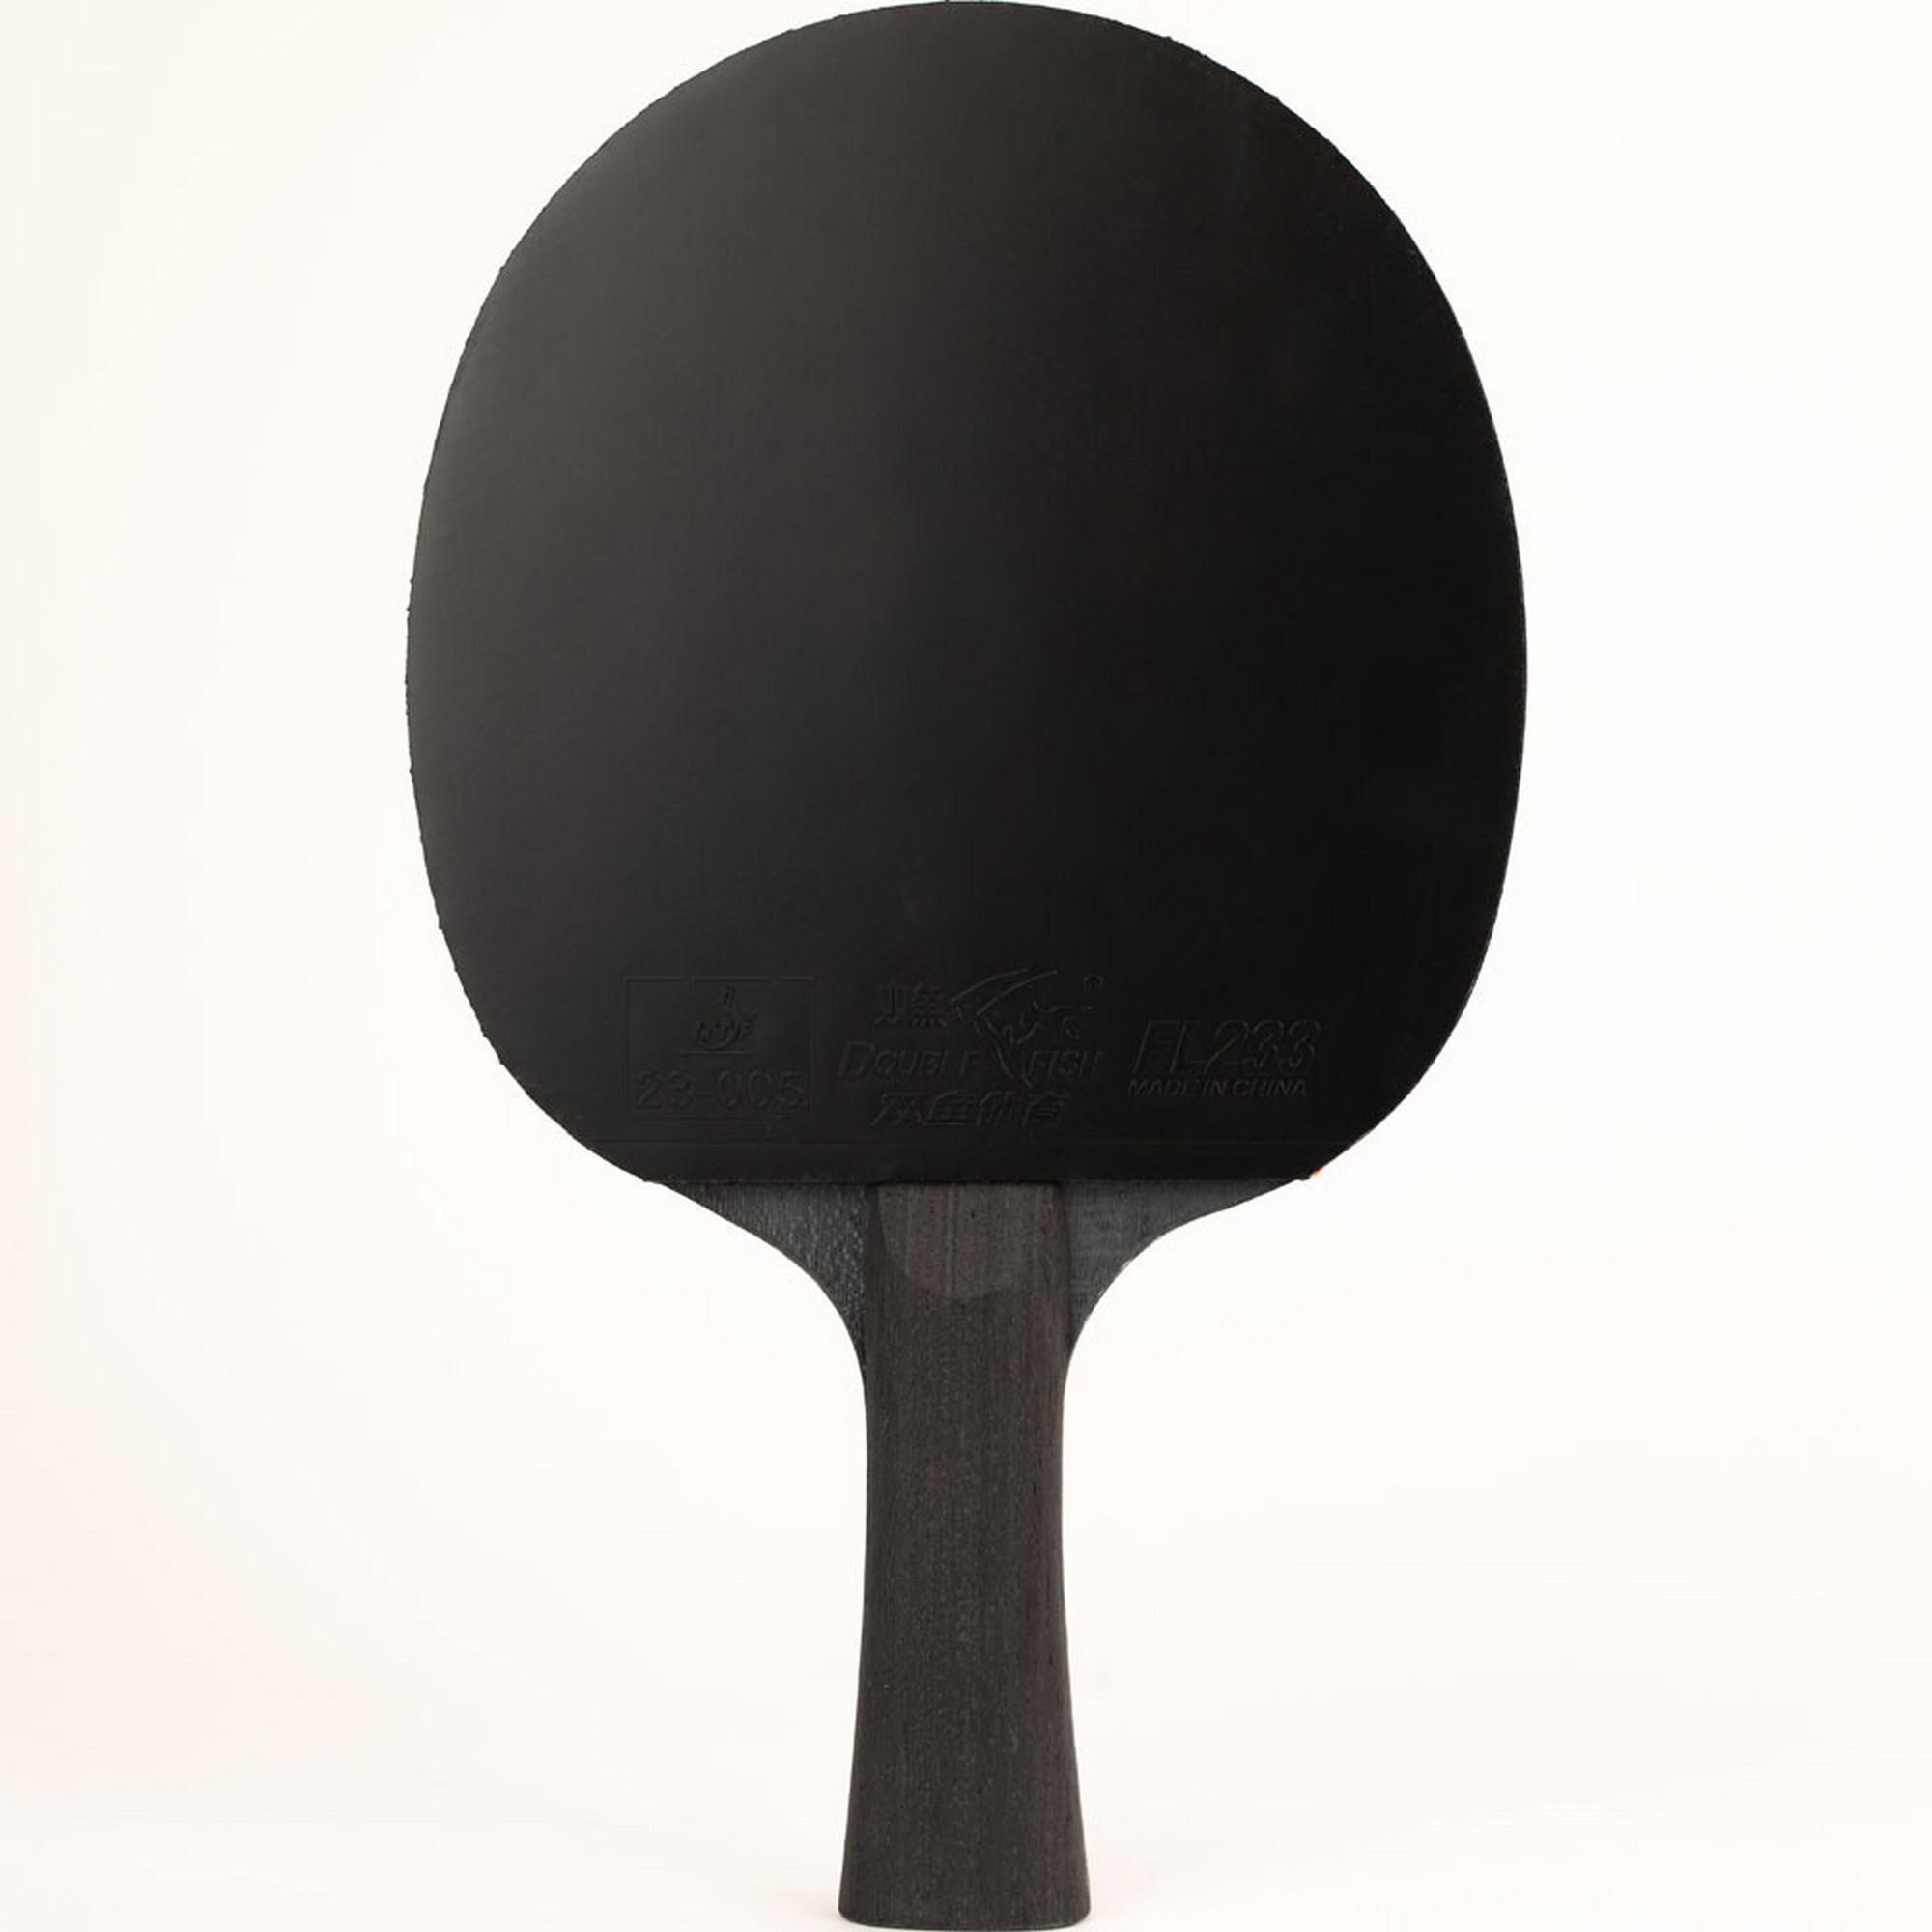 Ракетка для настольного тенниса Double Fish Black Carbon King Racket 5*****, ITTF Appr 2000_2000